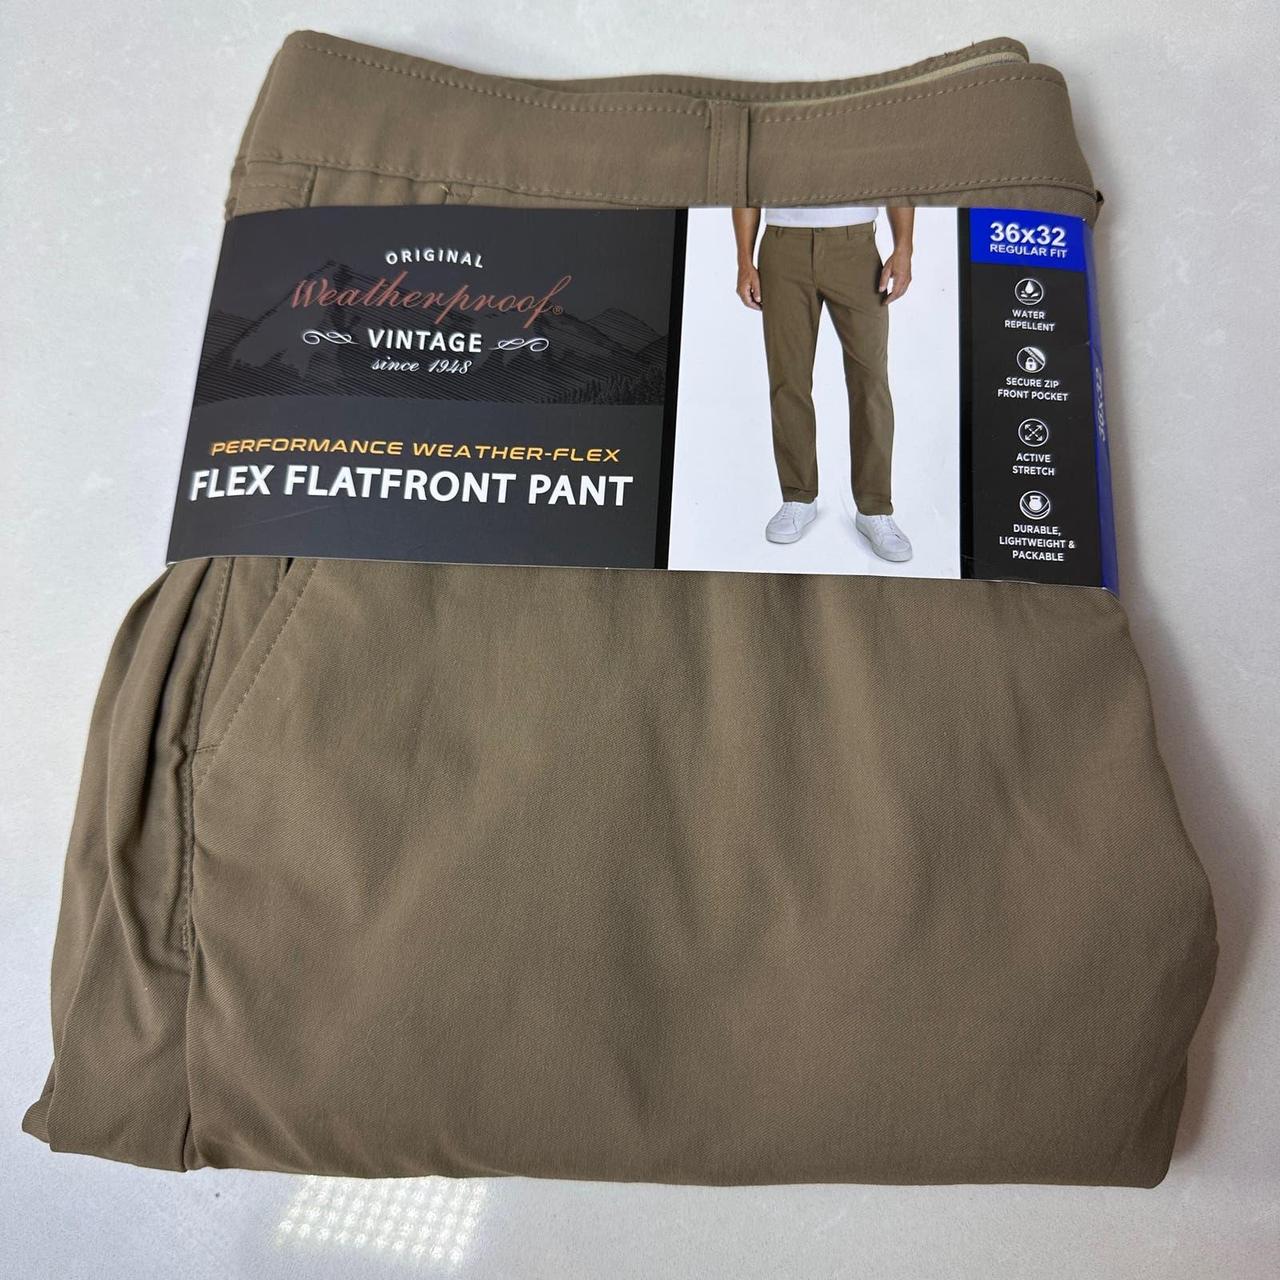 Weatherproof Vintage Men’s Performance Weather-Flex Flat Front Pants